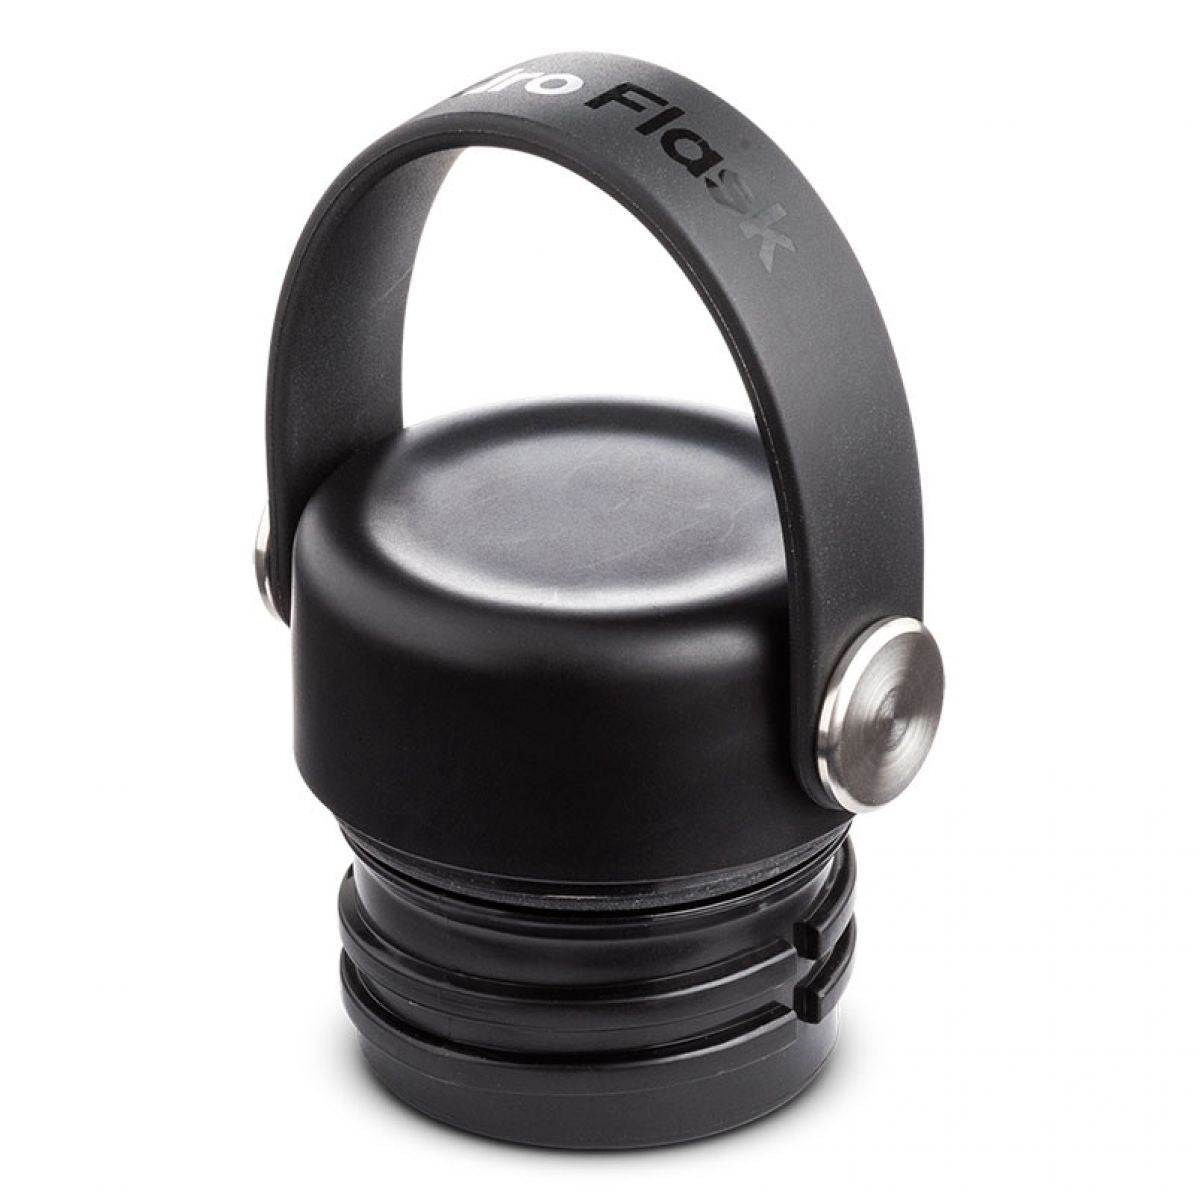 Hydro Flask Standard Flex Straw Cap in Black with handle.